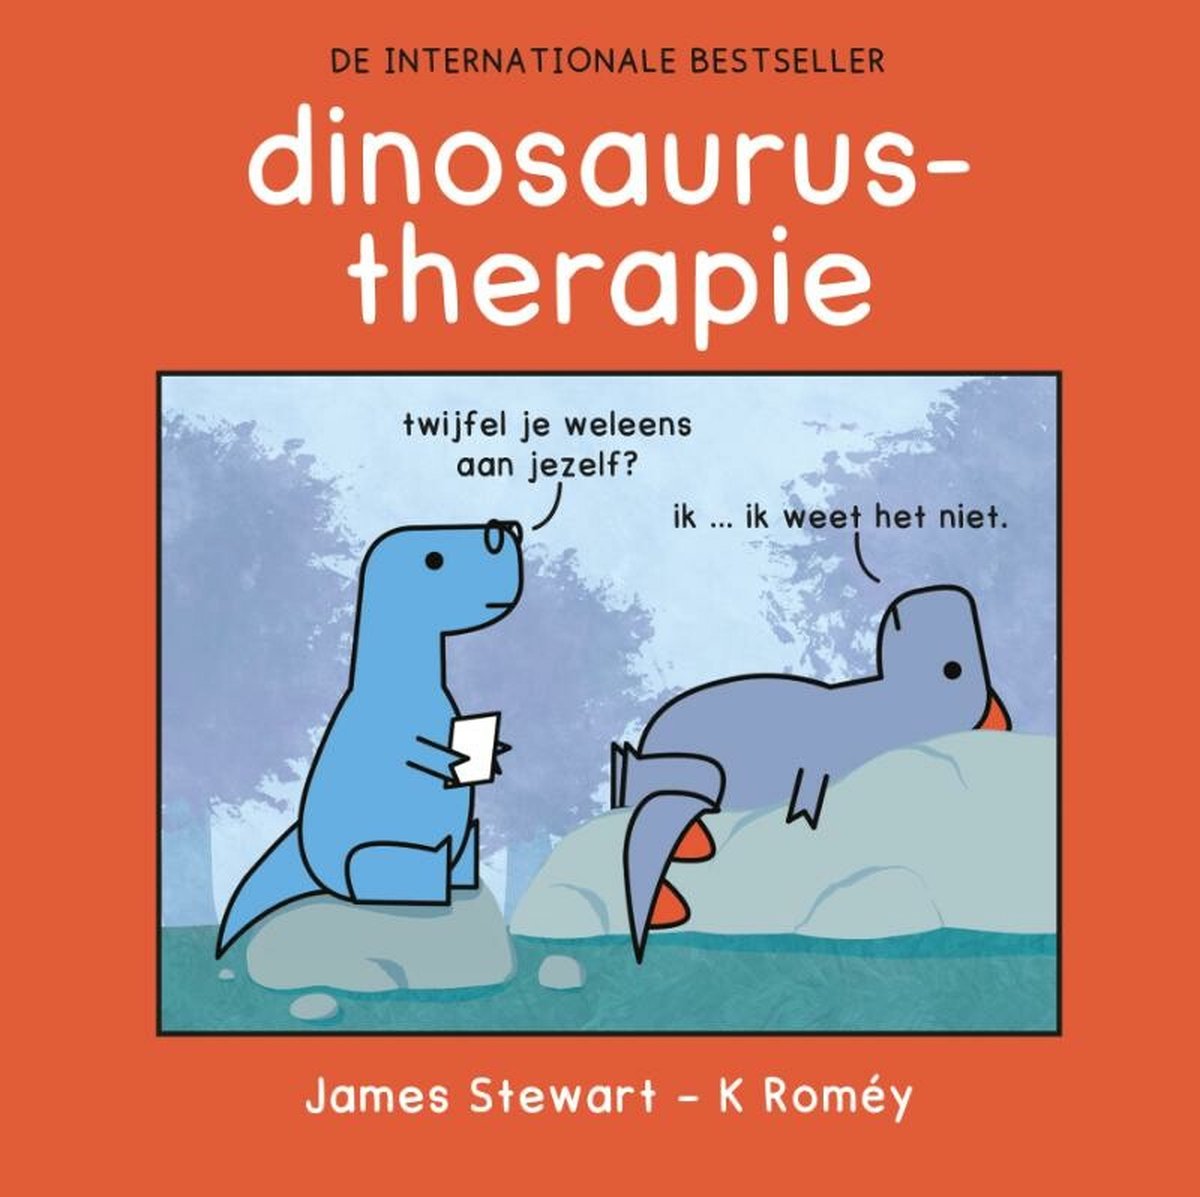 Dinosaurus therapie – James Stewart en K Roméy